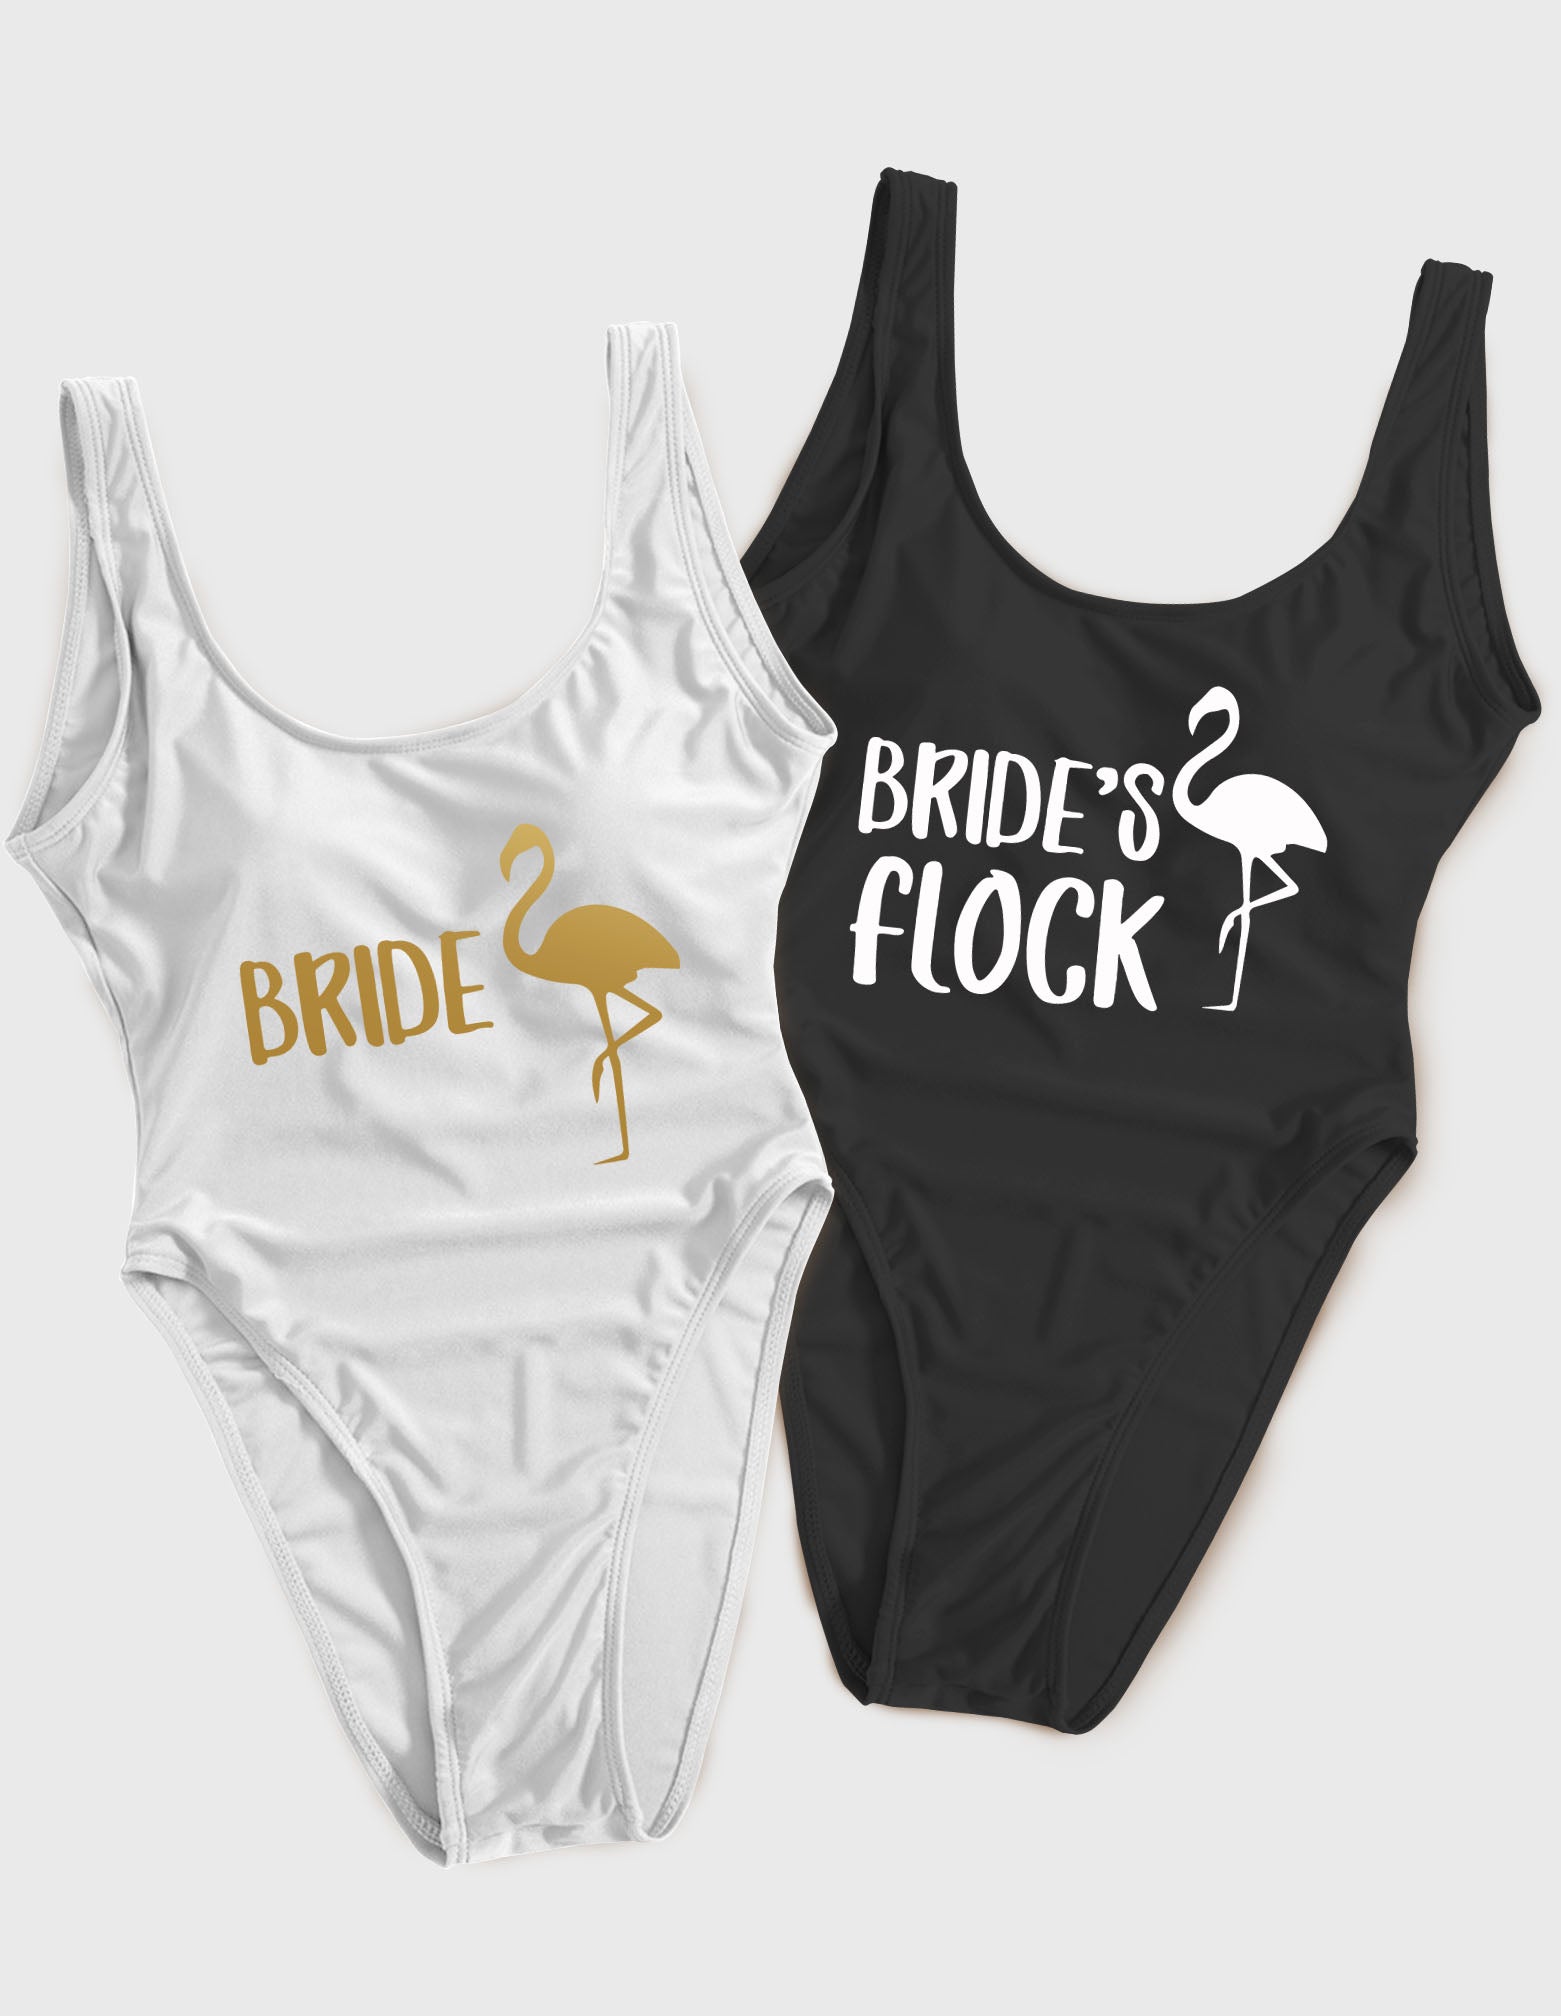 Bride's Flock Bride Swimsuit